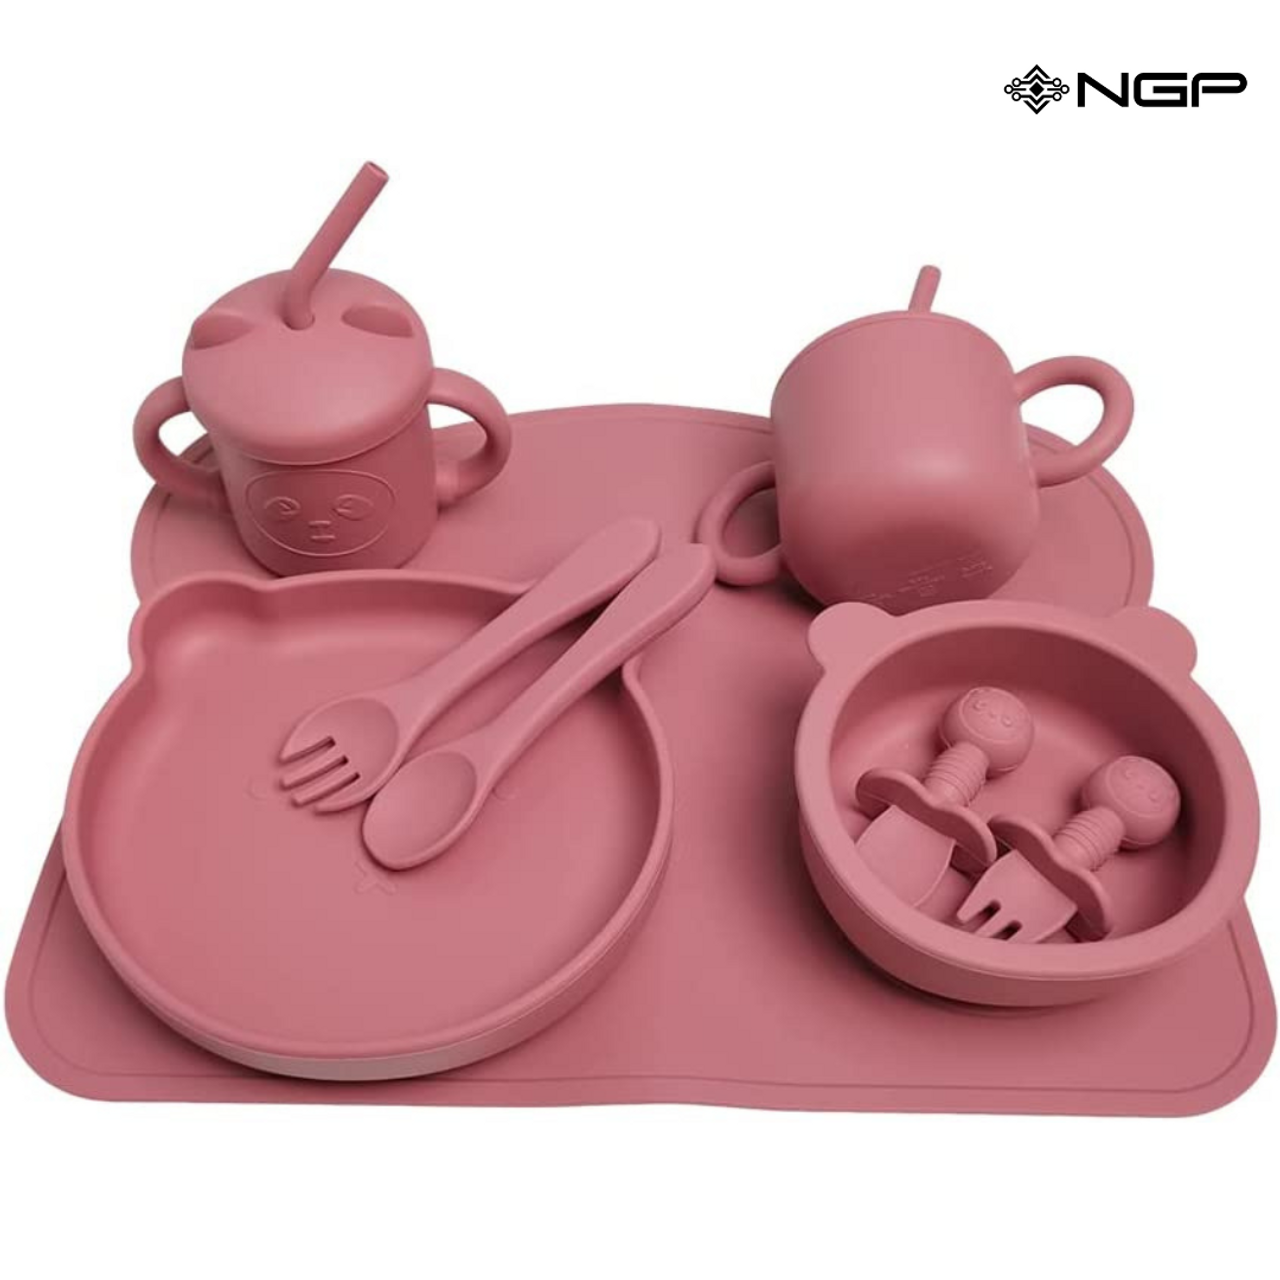 Baby Self Feeding Utensils Spoon and Fork Set Pink